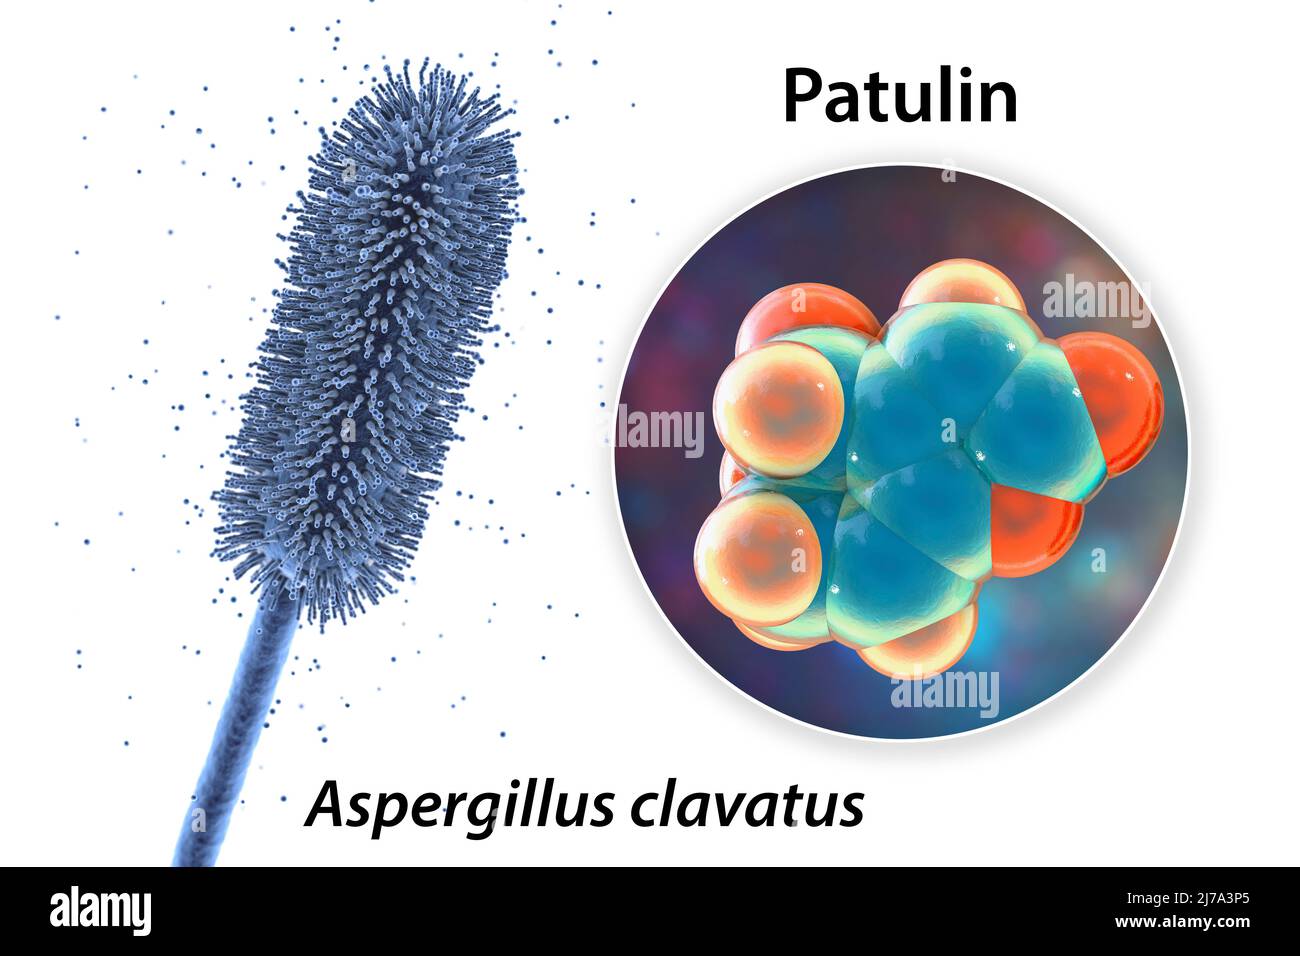 Aspergillus clavatus Schimmelpilze und Molekül des Patulintoxins, Illustration Stockfoto